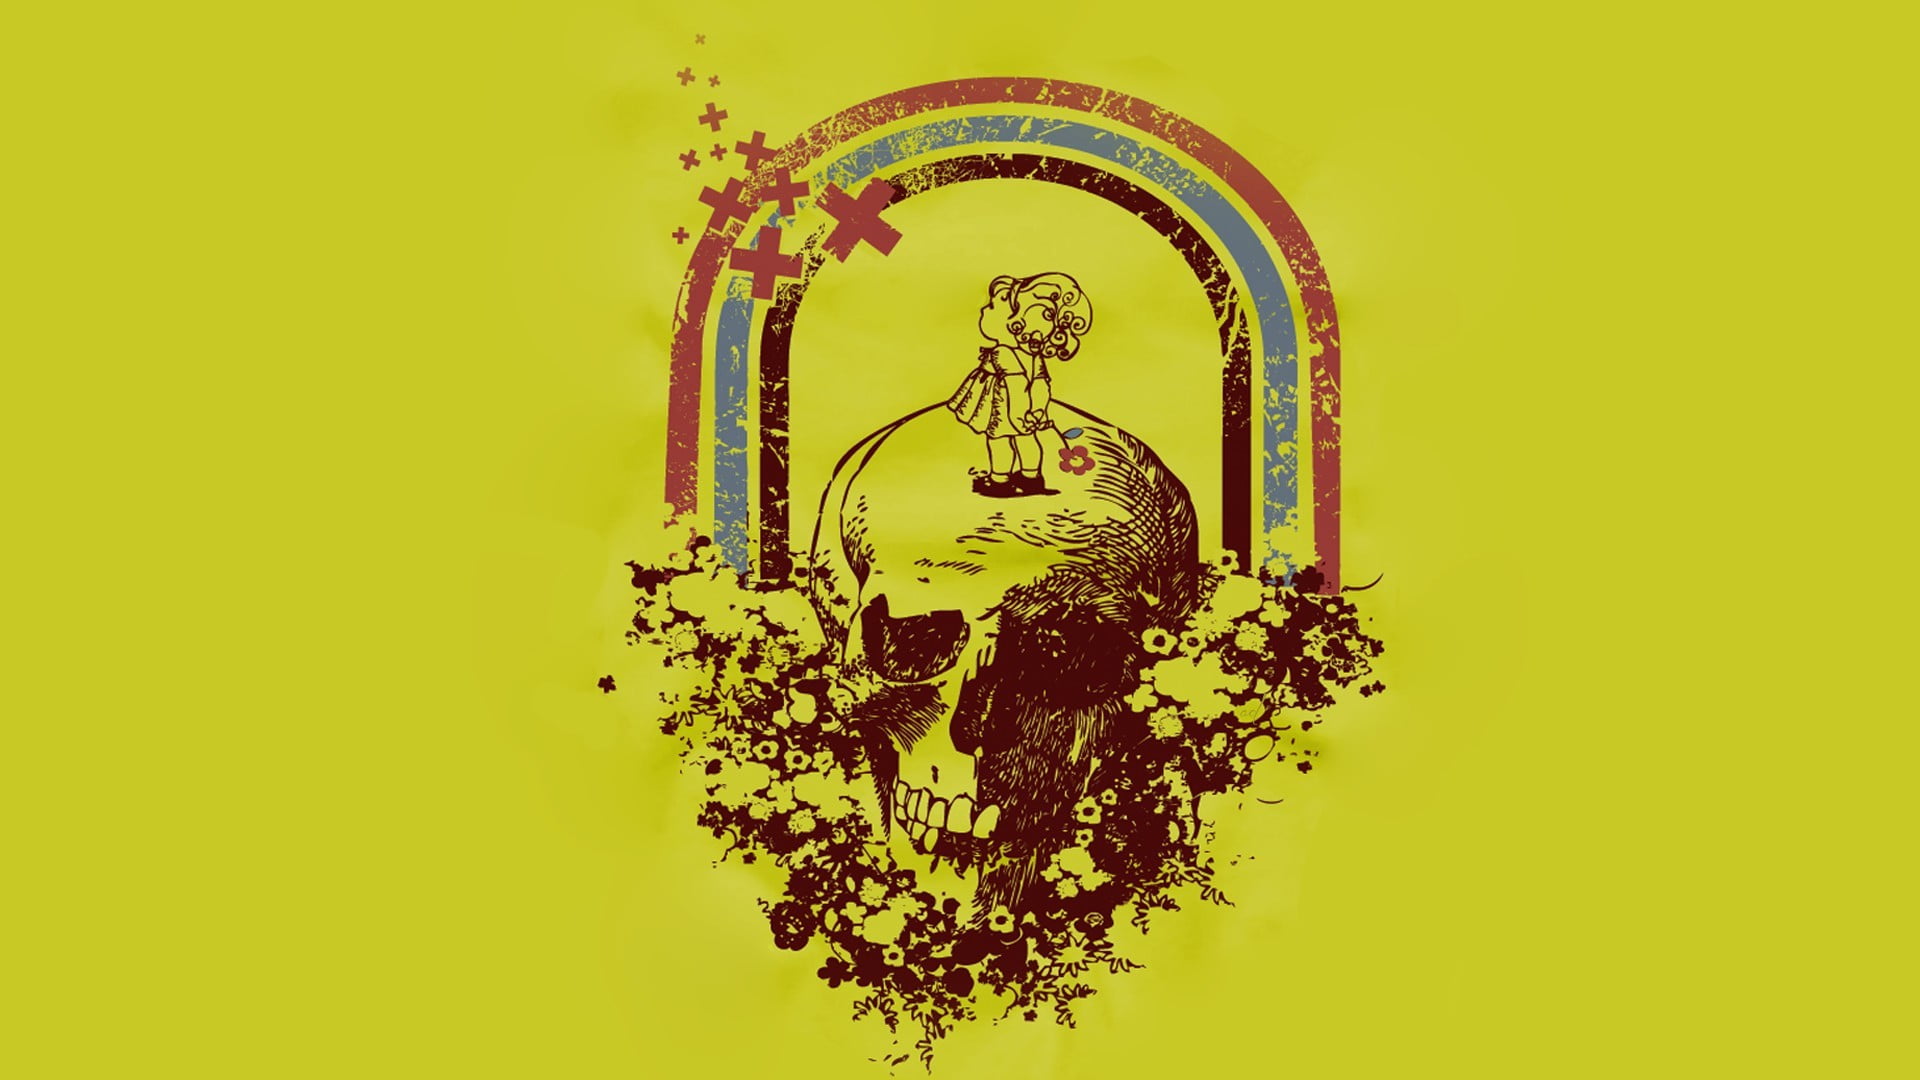 skull and rainbow artwork, minimalism, simple background, yellow